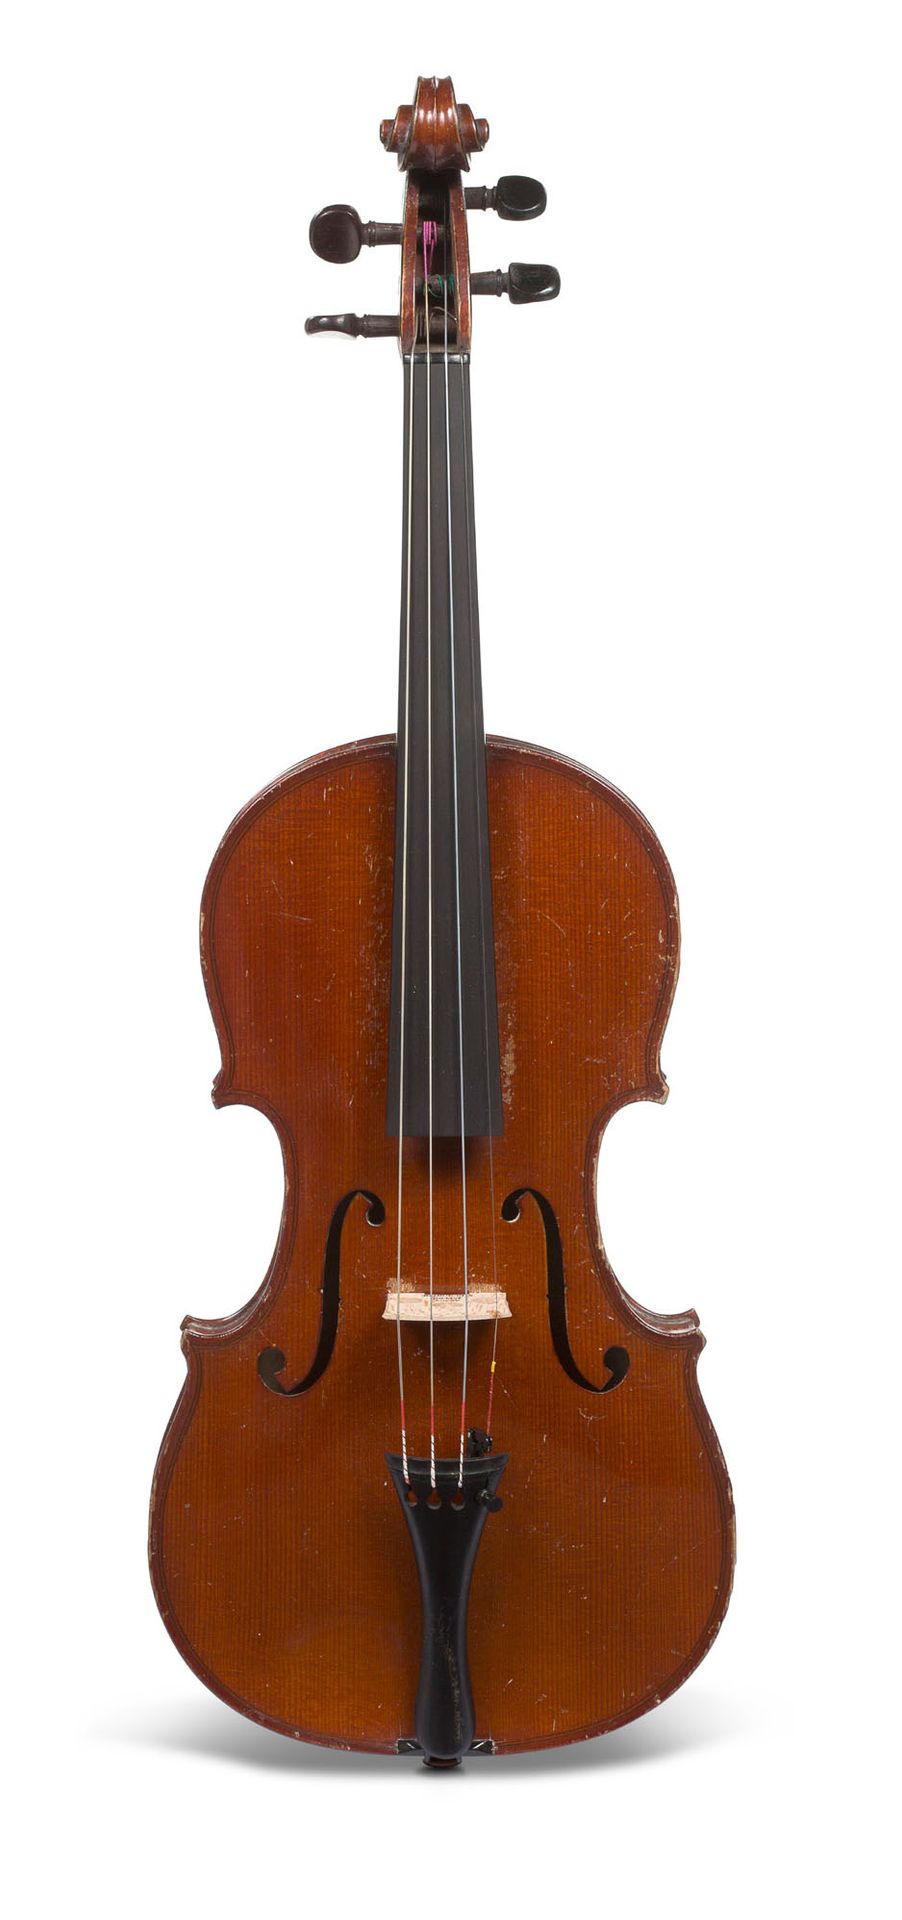 Null 20世纪初的法国小提琴，由Laberte Humbert frères制造，背面有铁质标记。
状况非常好。背面是359毫米。
带学习用弓和木箱。